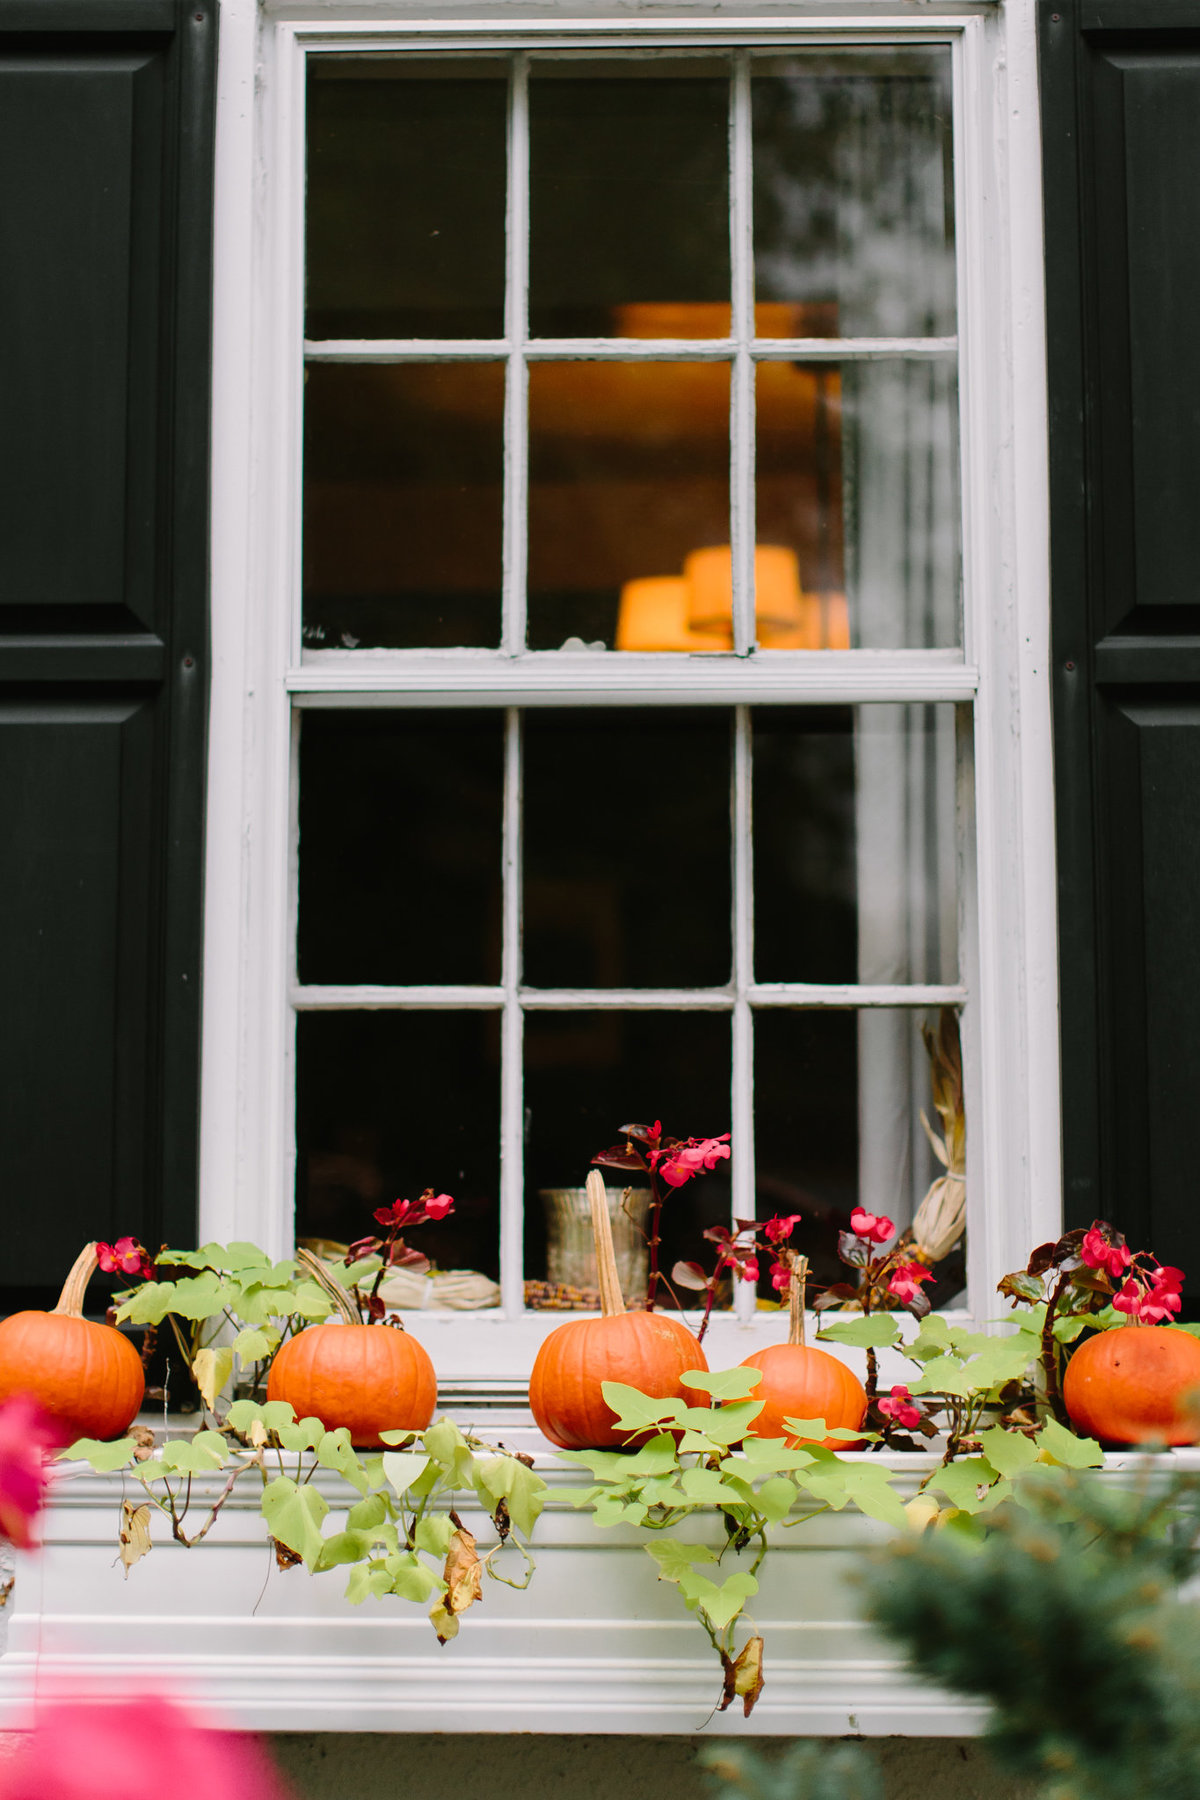 window decor with pumpkins